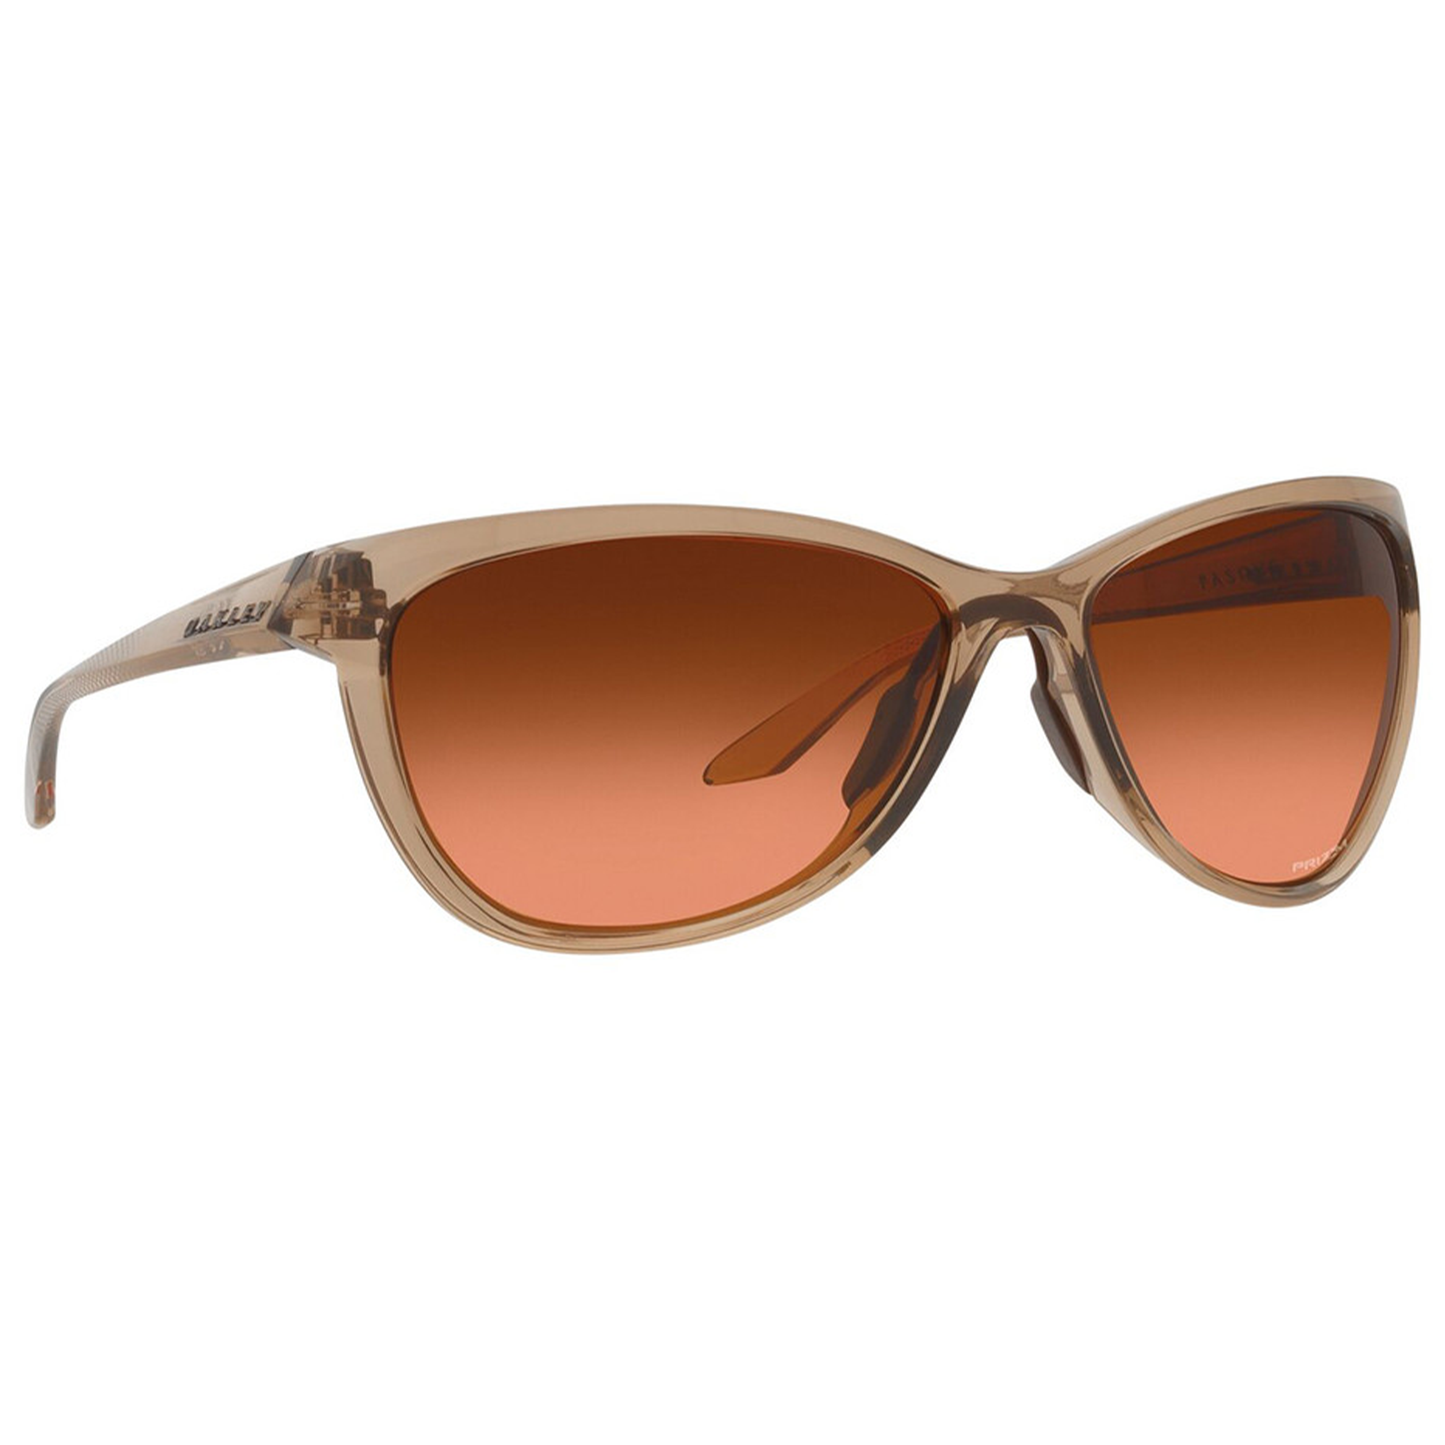 Oakley Pasque Sunglasses (Sepia) Prizm Brown Gradient Lens - Free Case